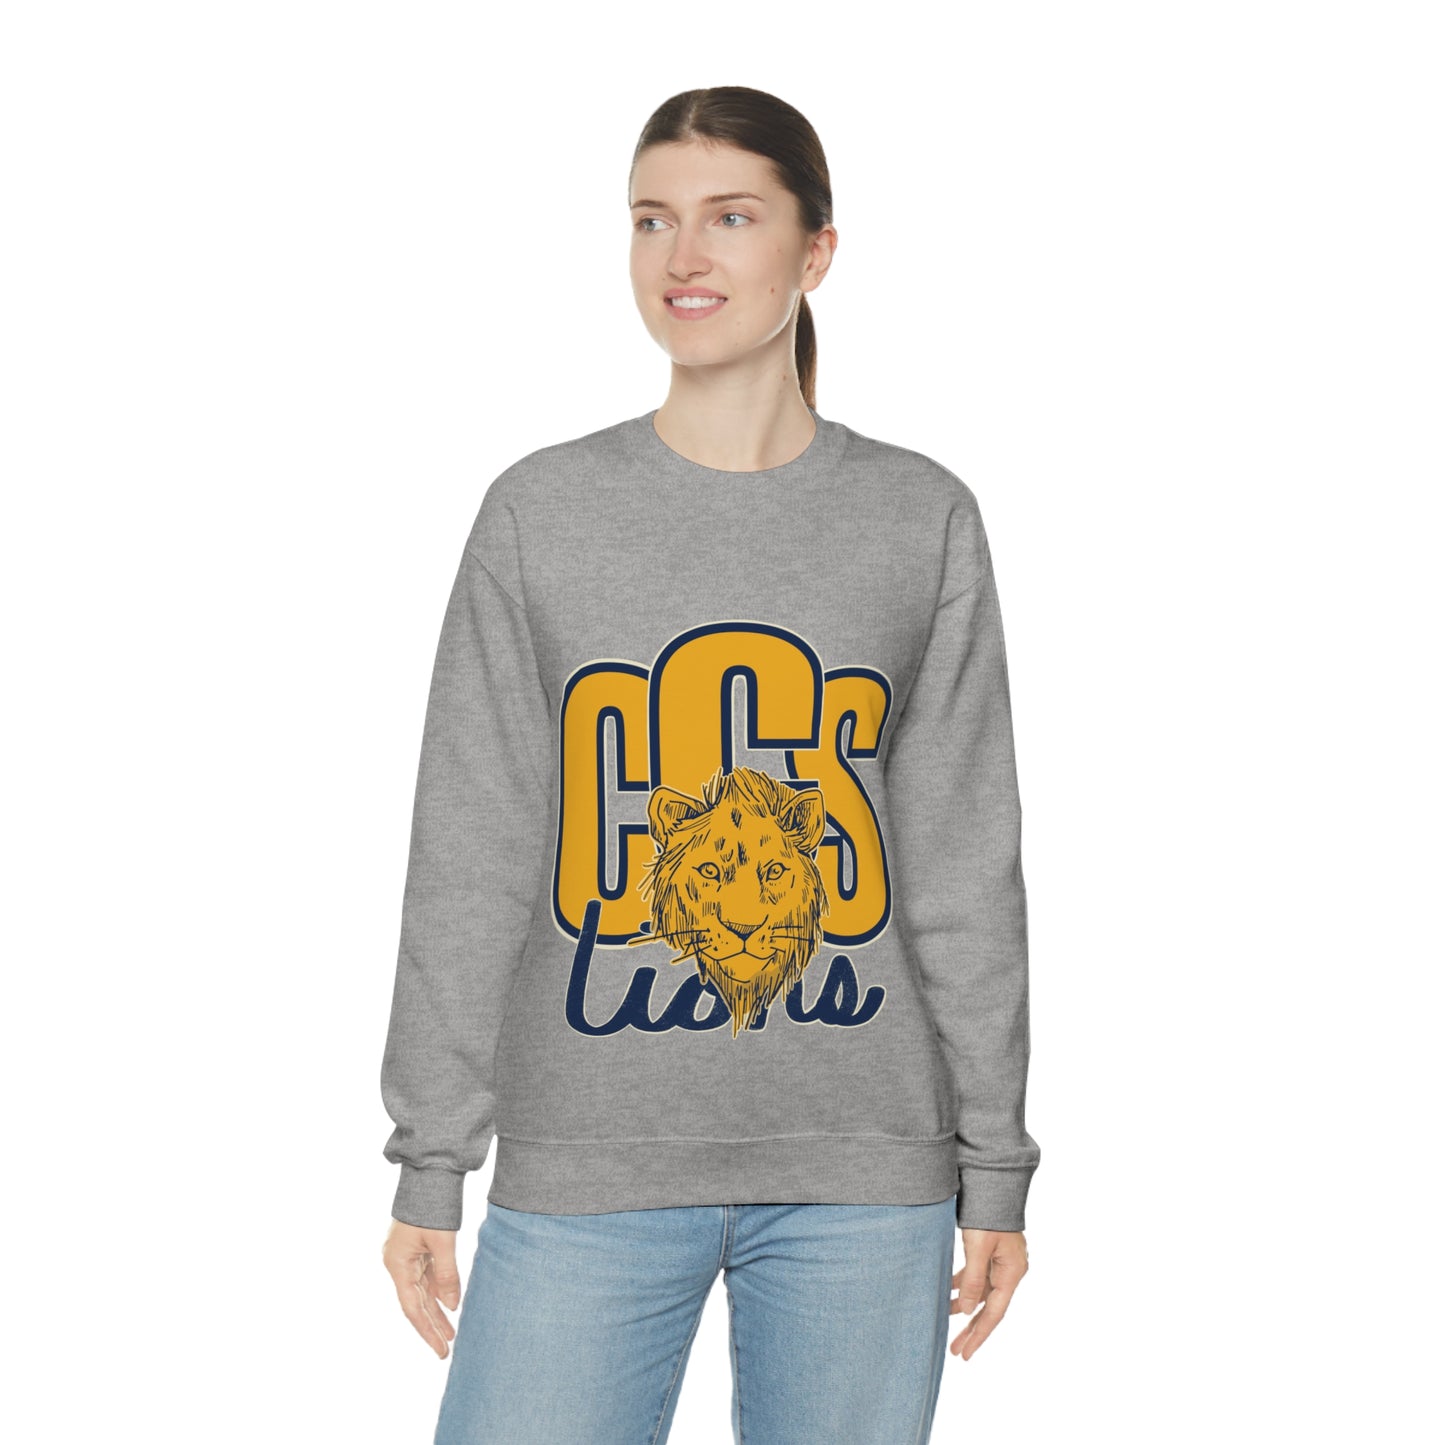 Coleman Christian School Lions Sweatshirt in Sport Grey and Light Blue